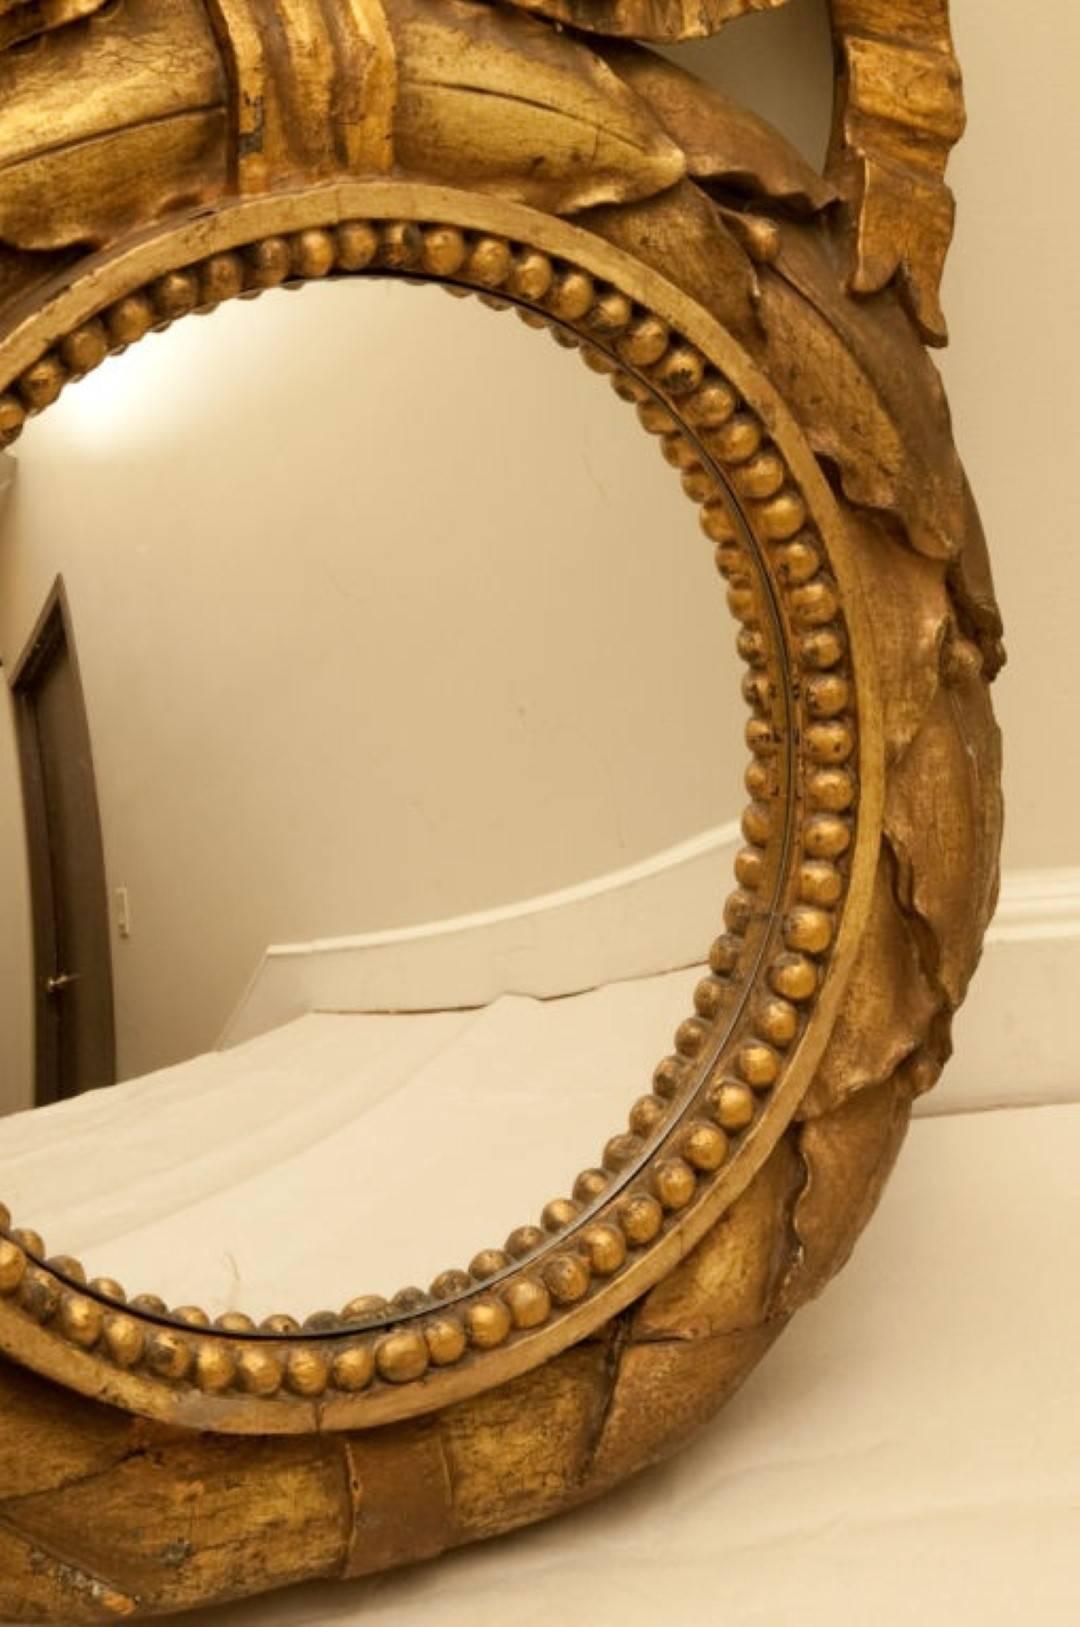 Late 19th Century French Louis XVI Style Giltwood Mirror